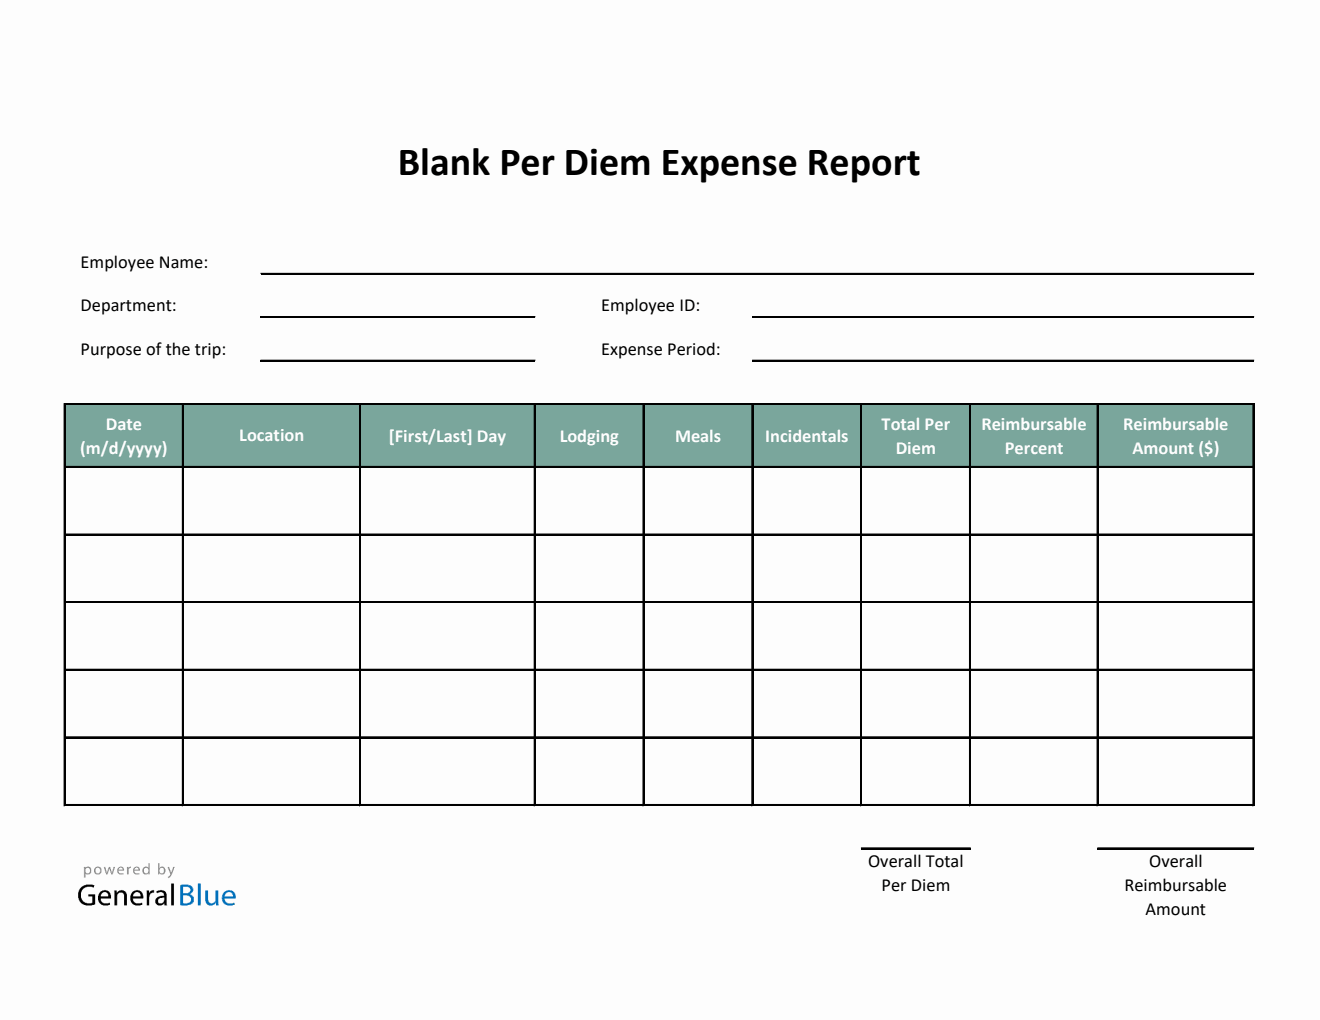 Blank Per Diem Expense Report Template in Excel (Green)